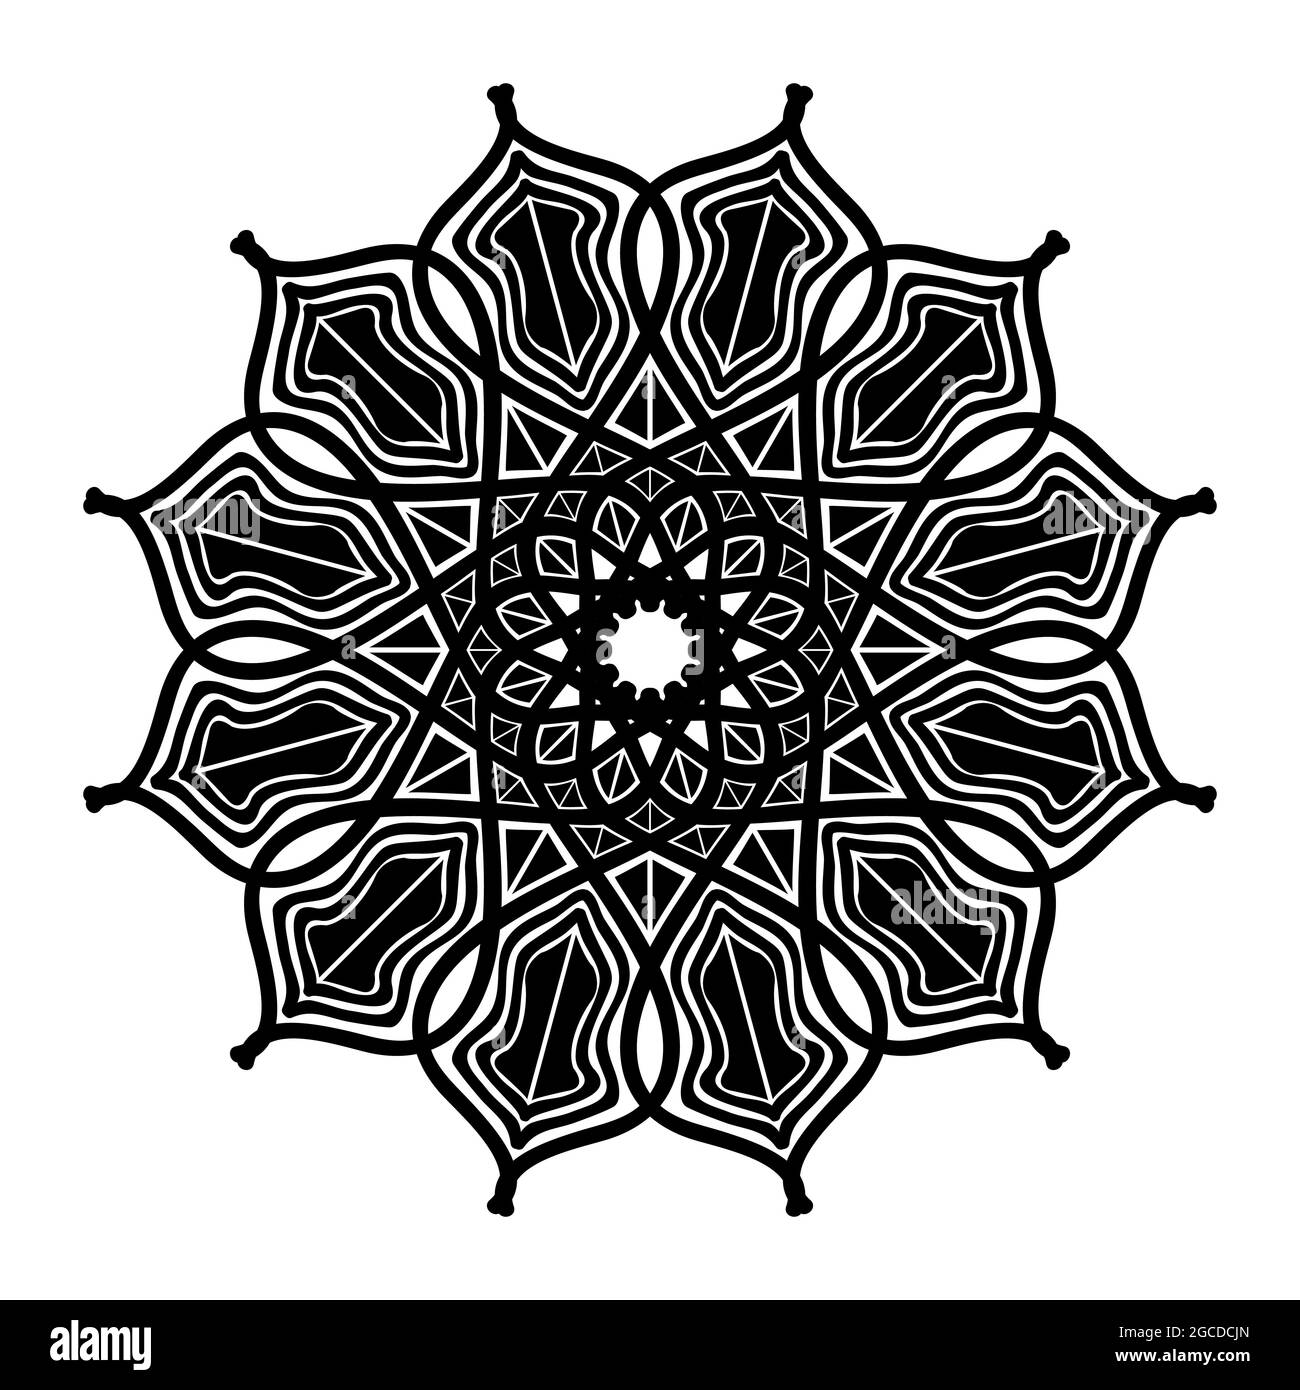 elegance background design artwork with arabic style traditinal geometric mandala design Stock Vector